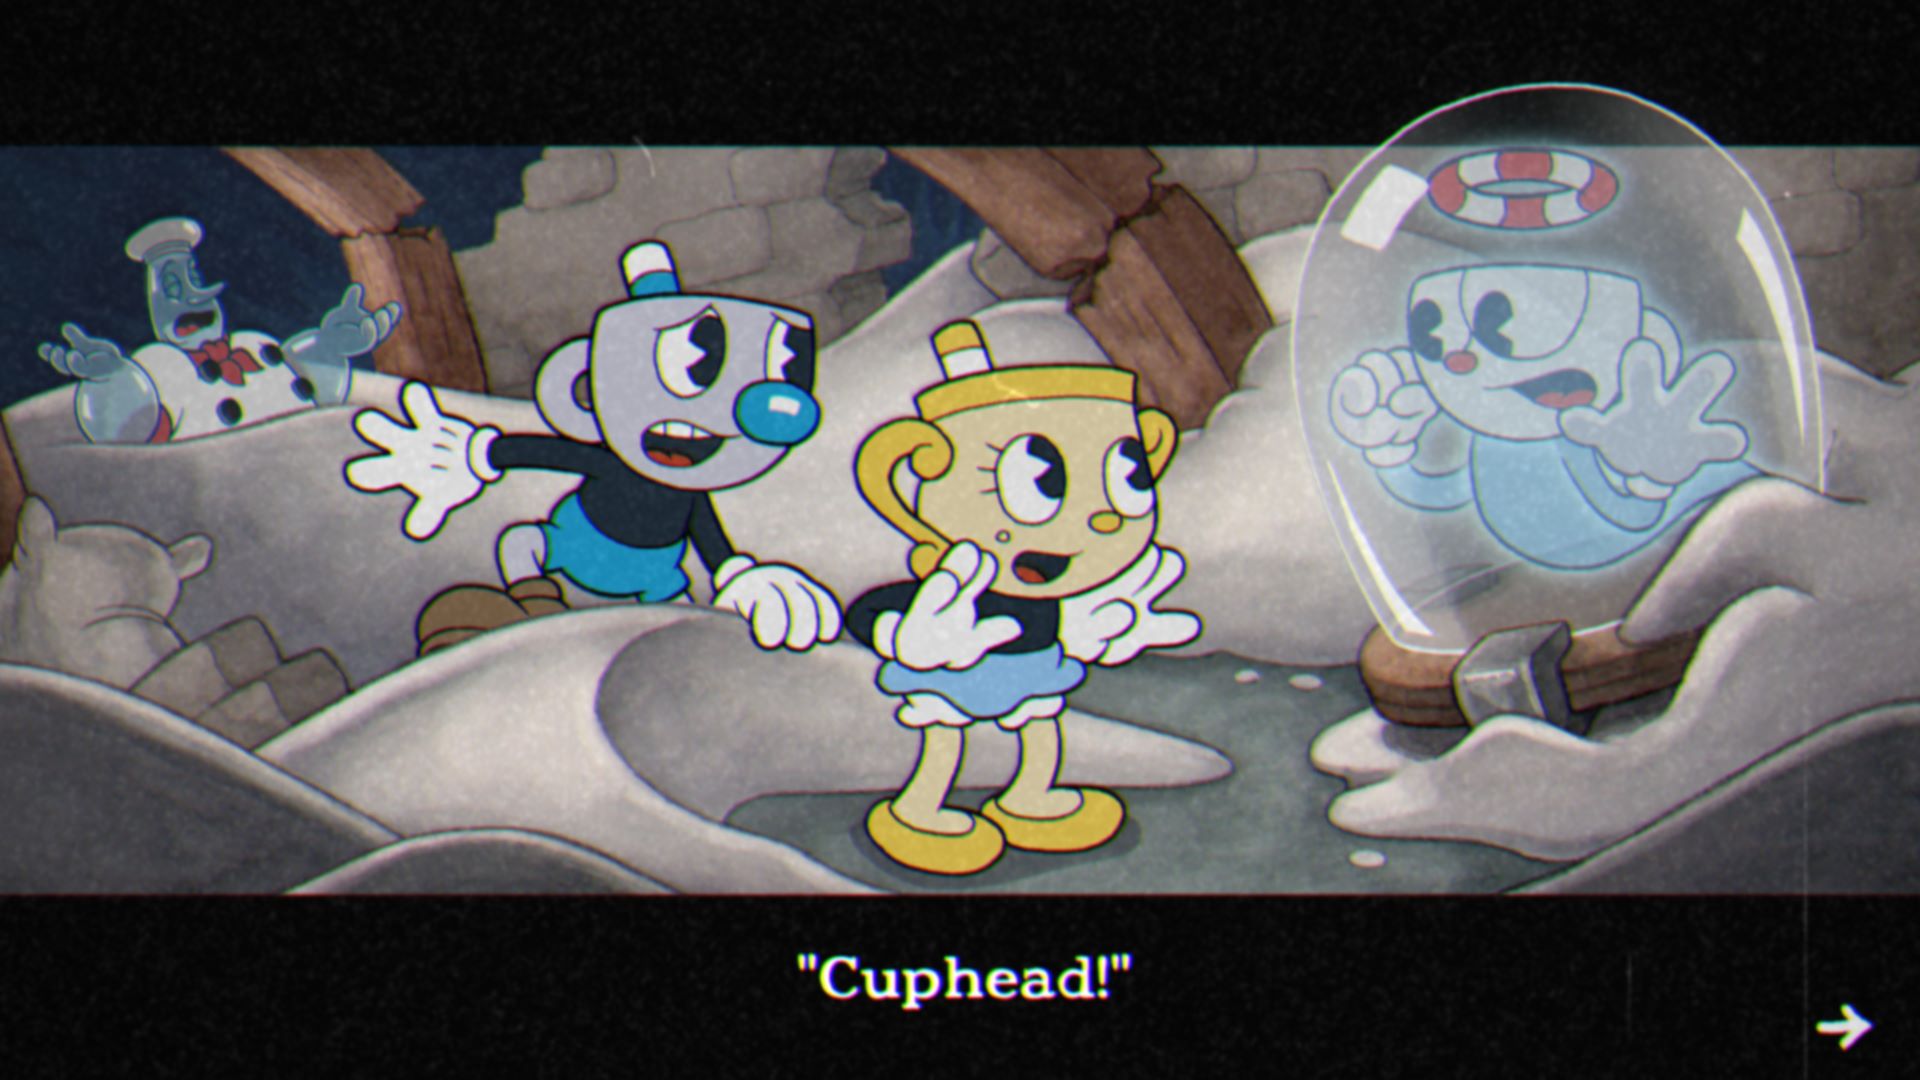 Cuphead - The Delicious Last Course